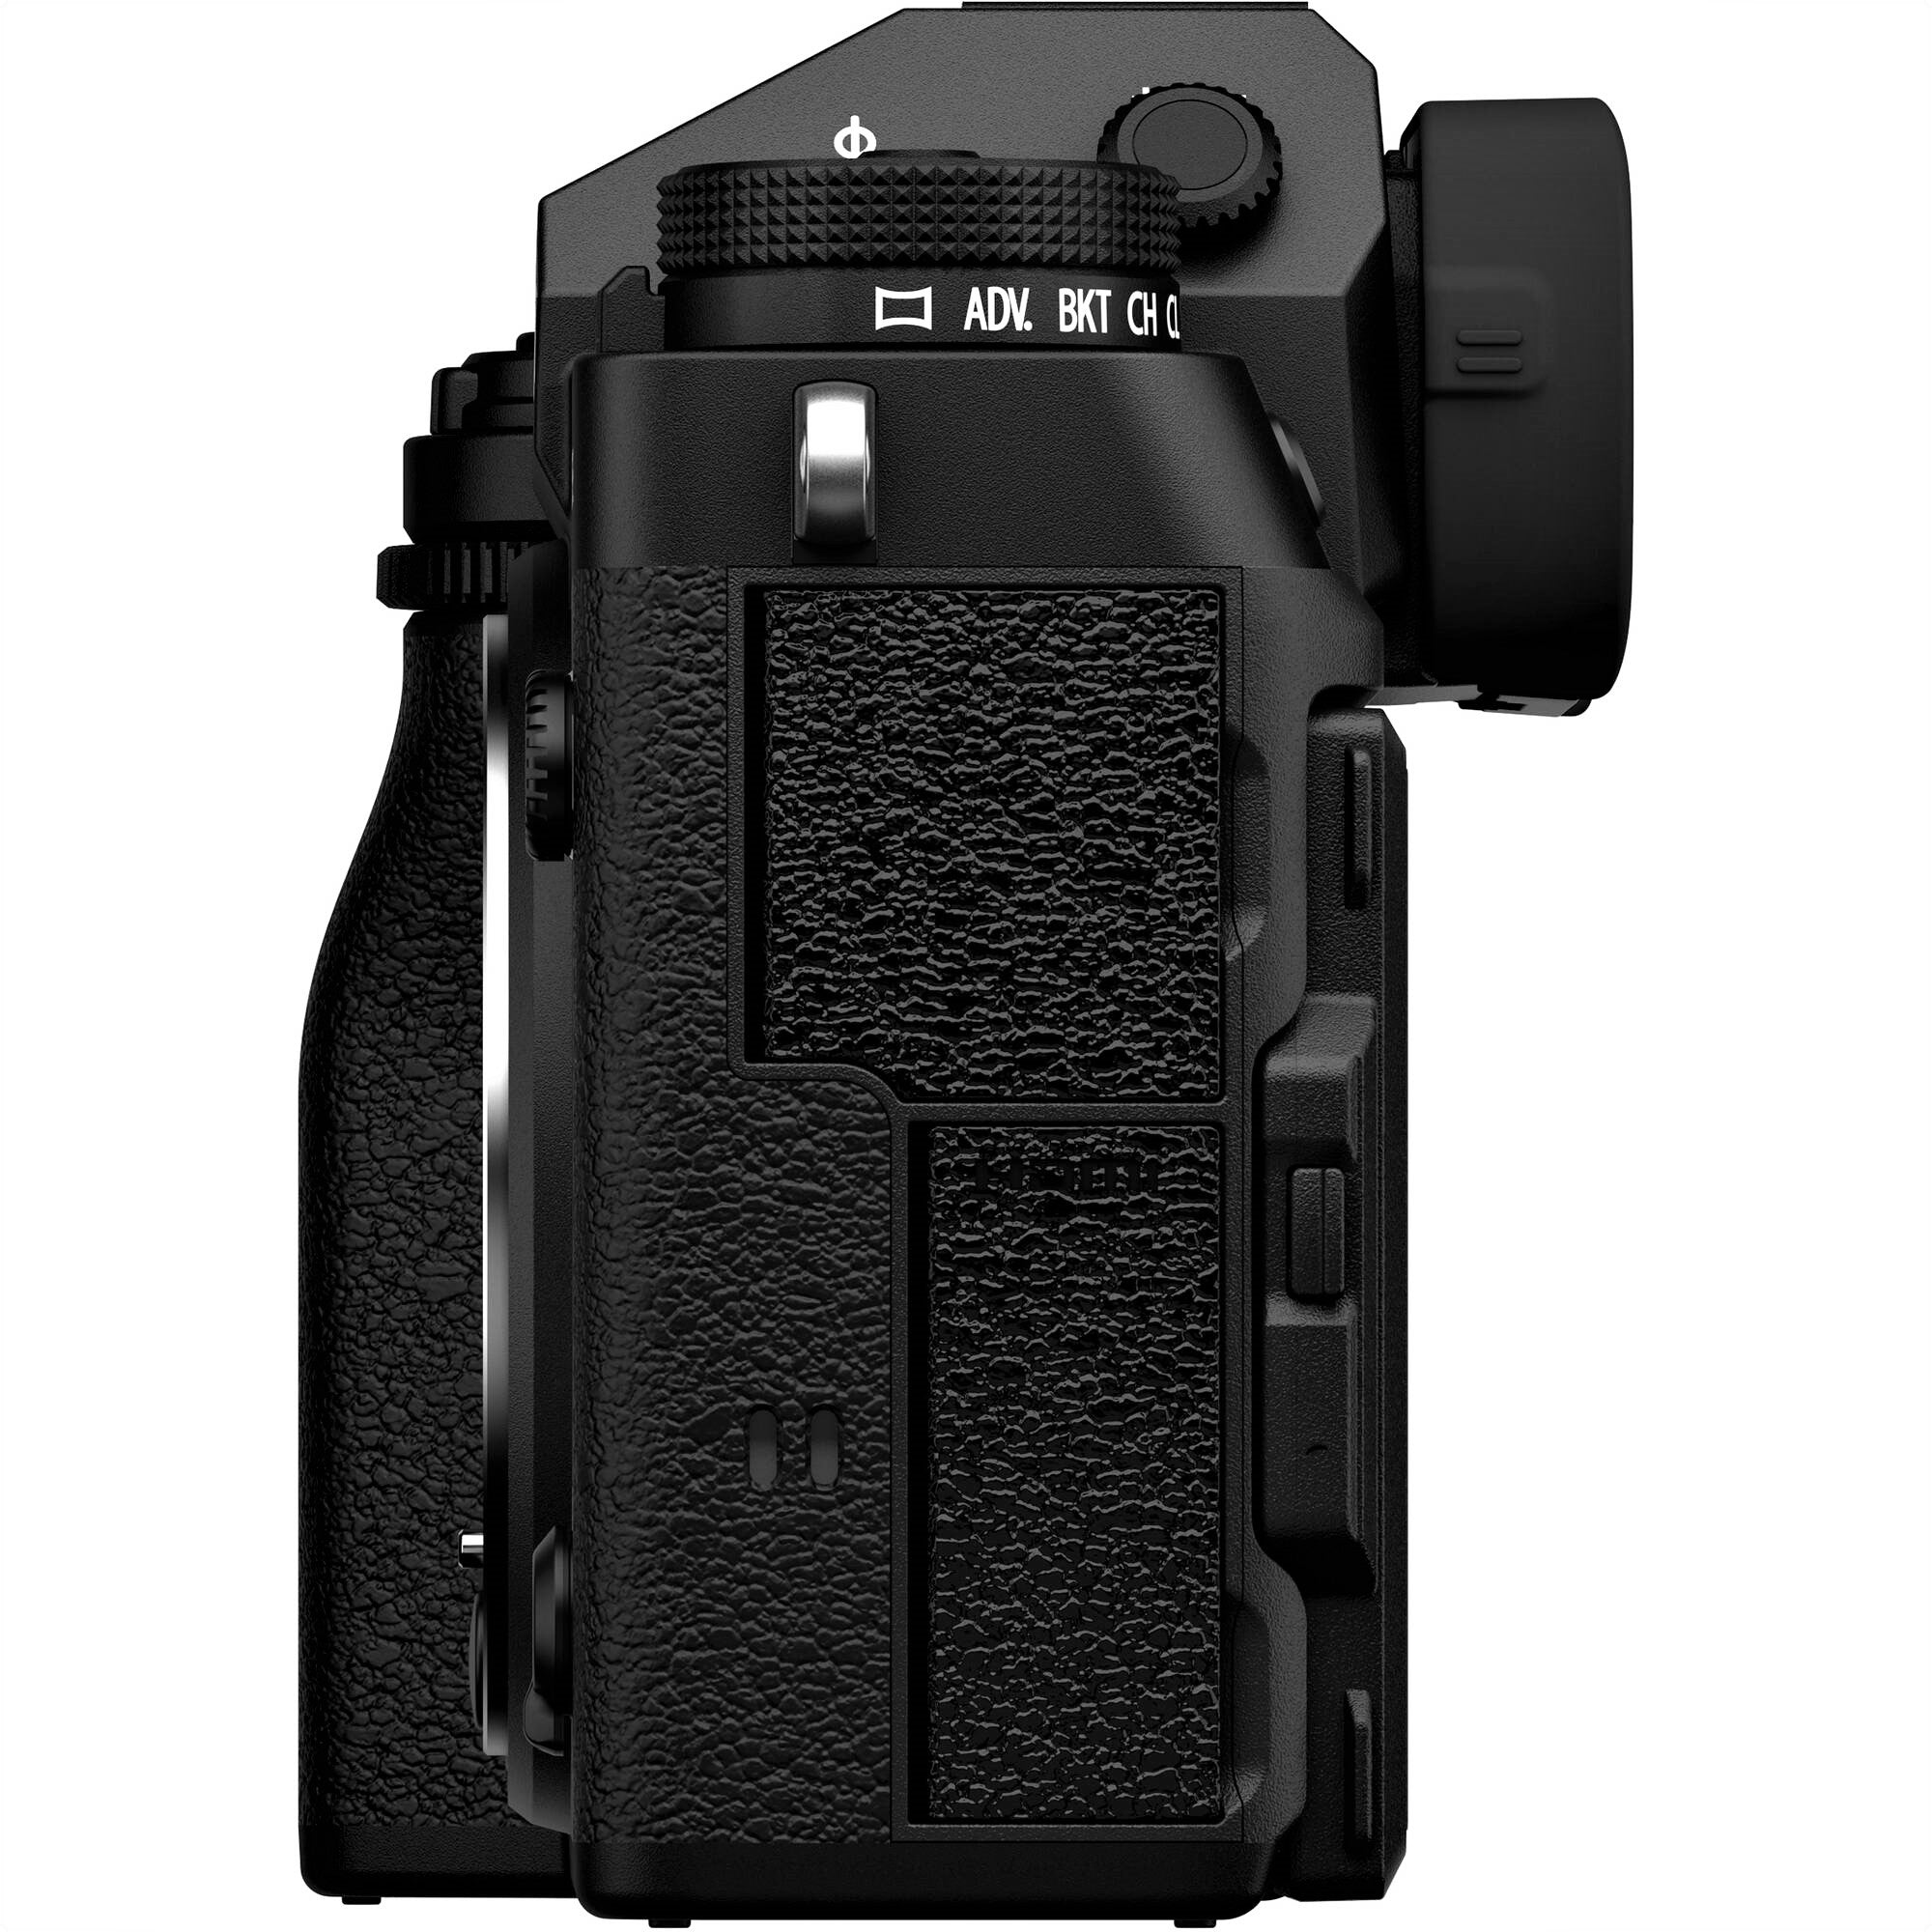 Fujifilm X-T5 Mirrorless Camera with 18-55mm Lens (Black) - Side View